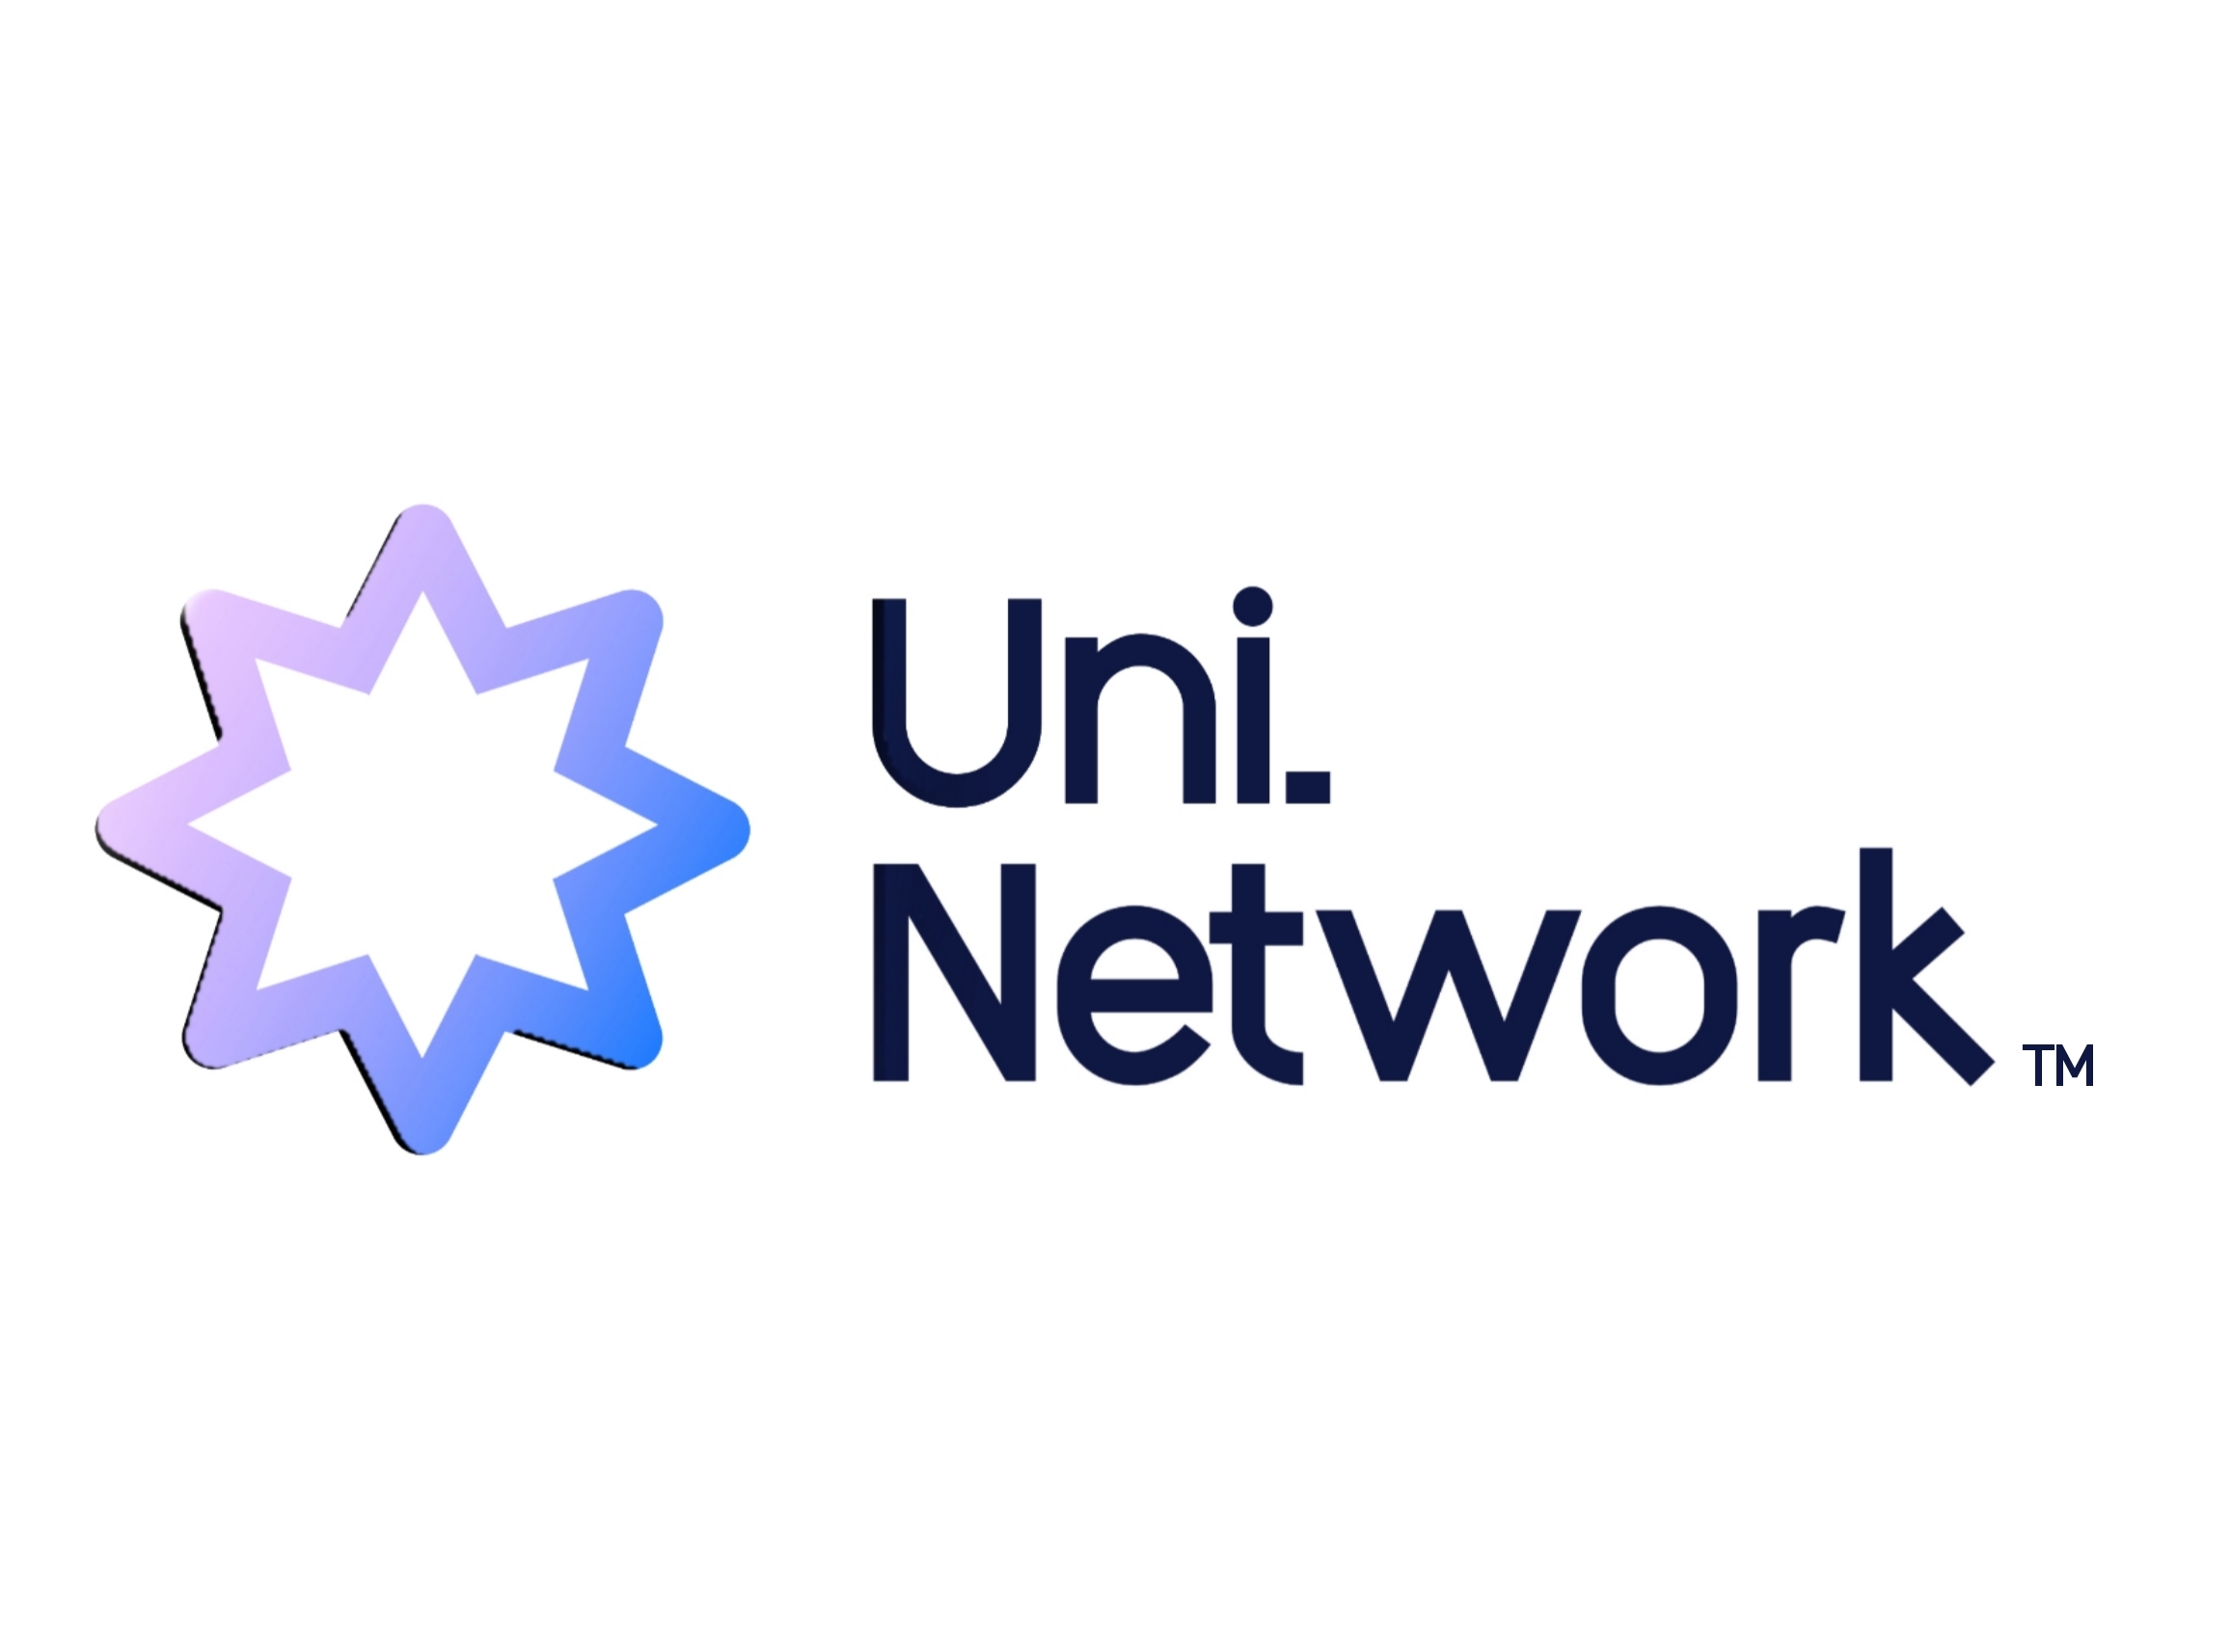 The new brand identify of Uni Network